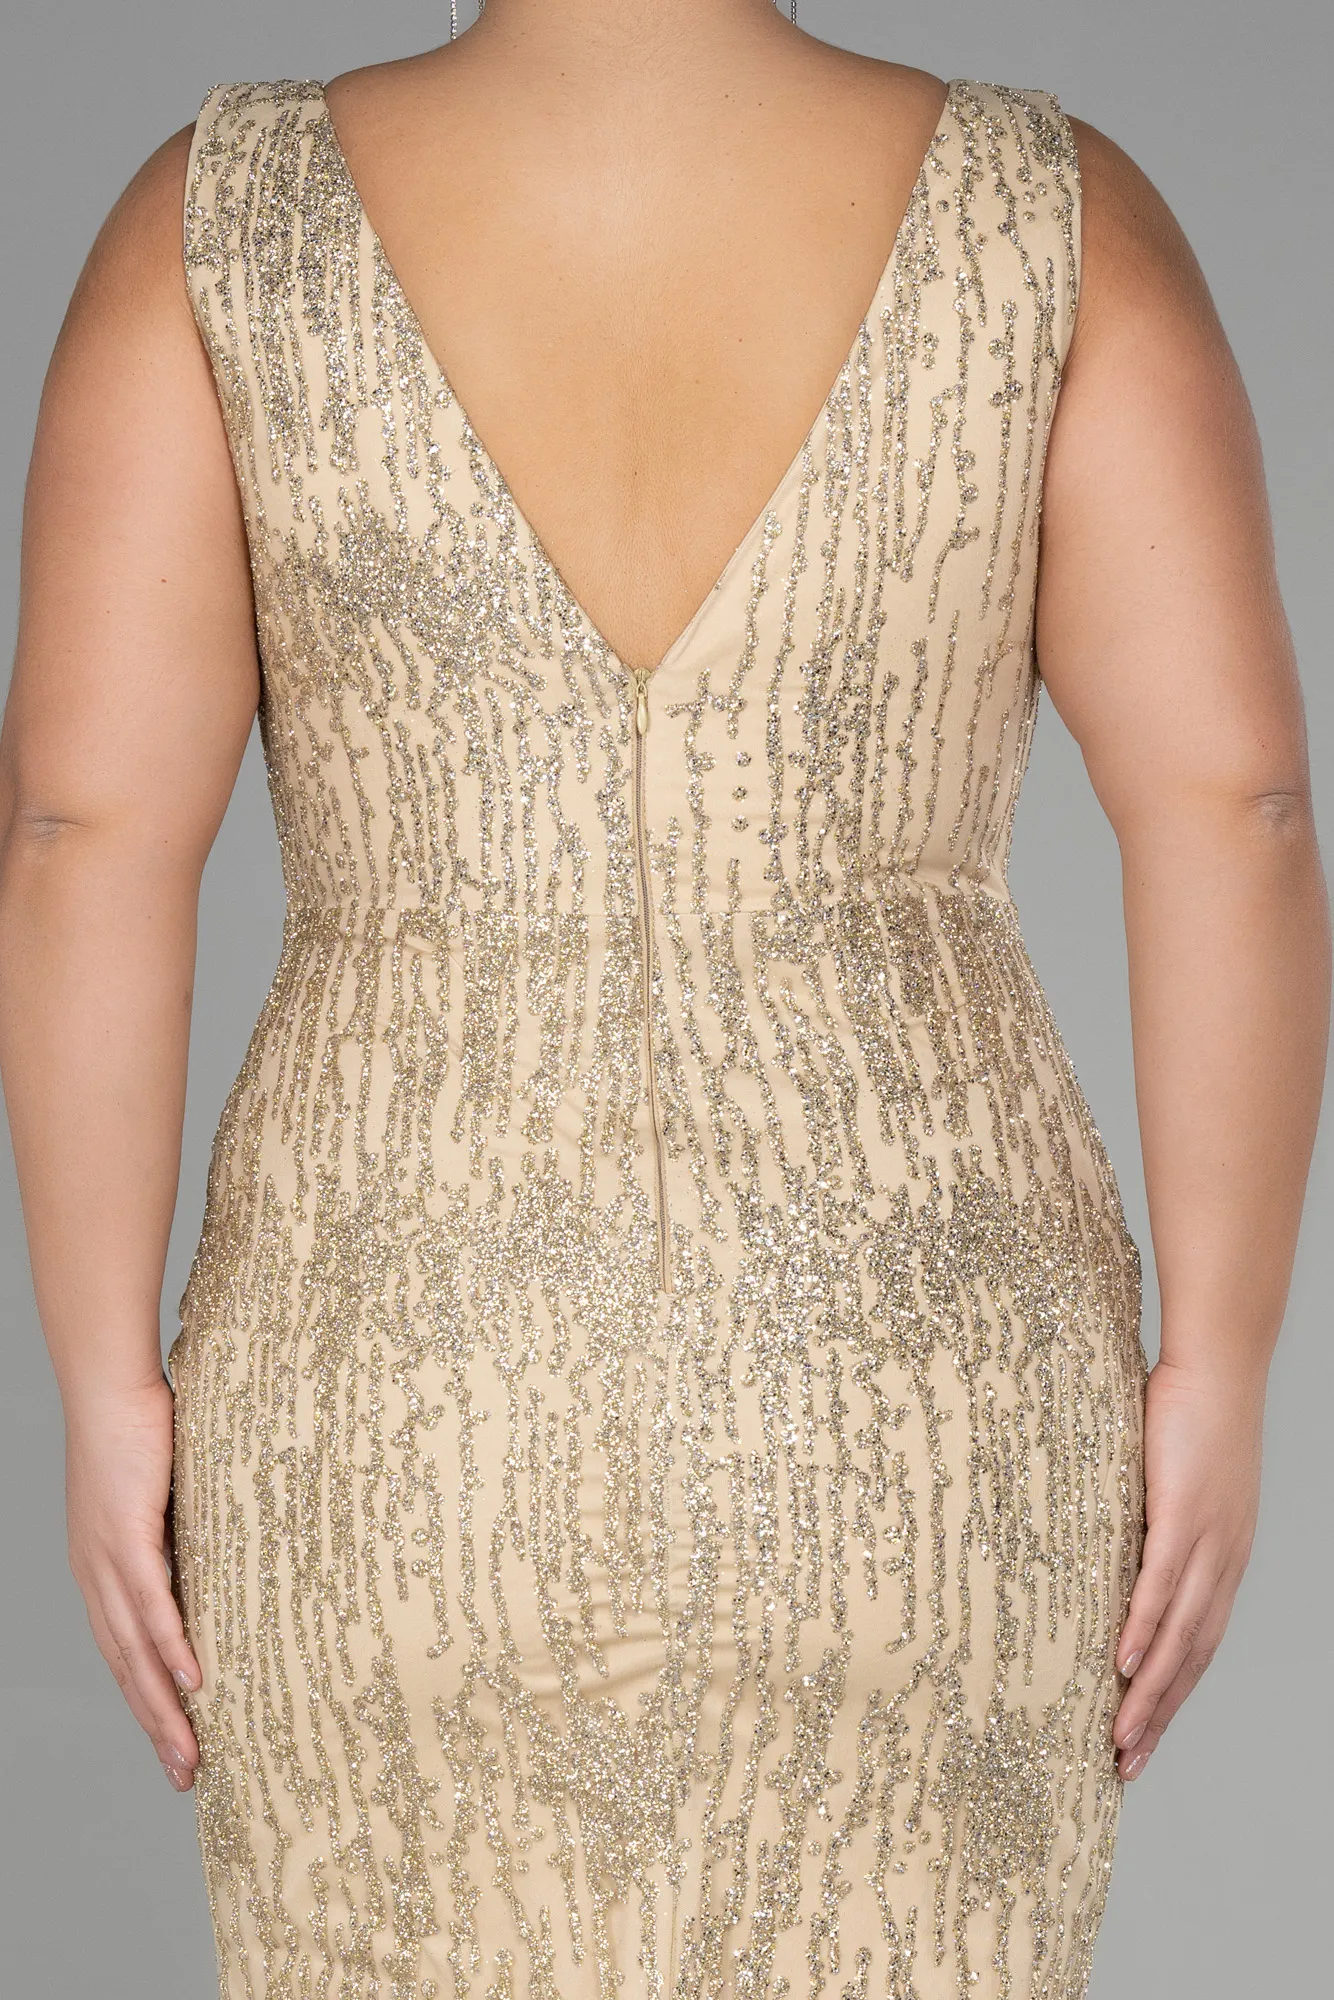 Gold-Long Plus Size Engagement Dress ABU3368